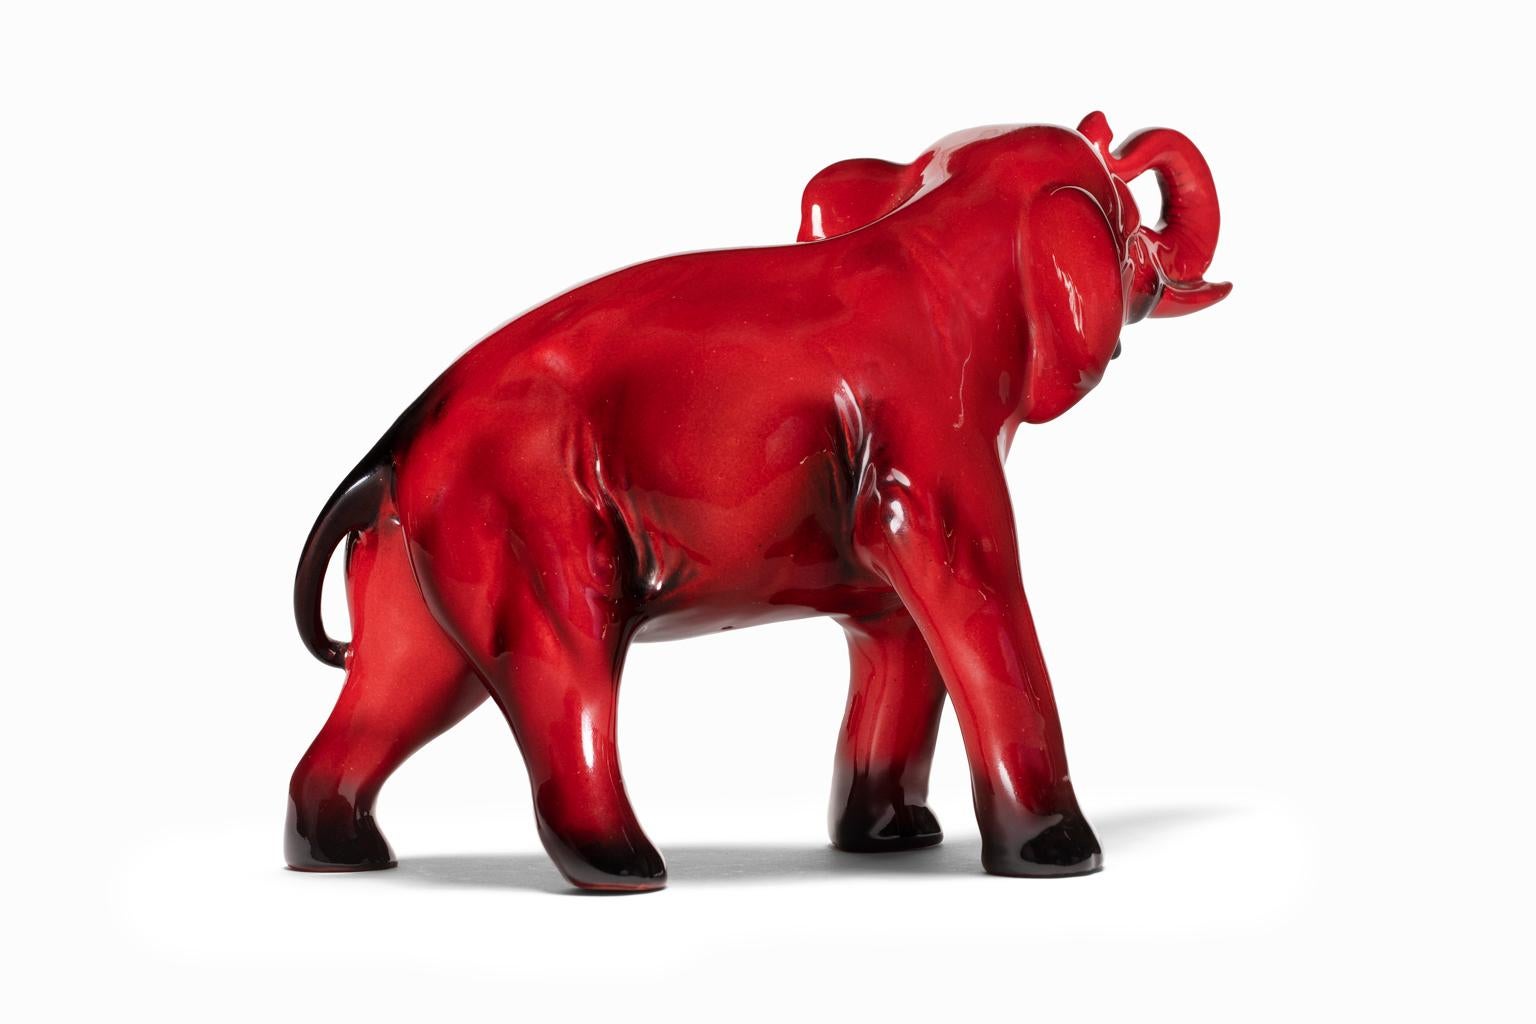 Glazed Royal Doulton Red Flambe Porcelain Figurine 